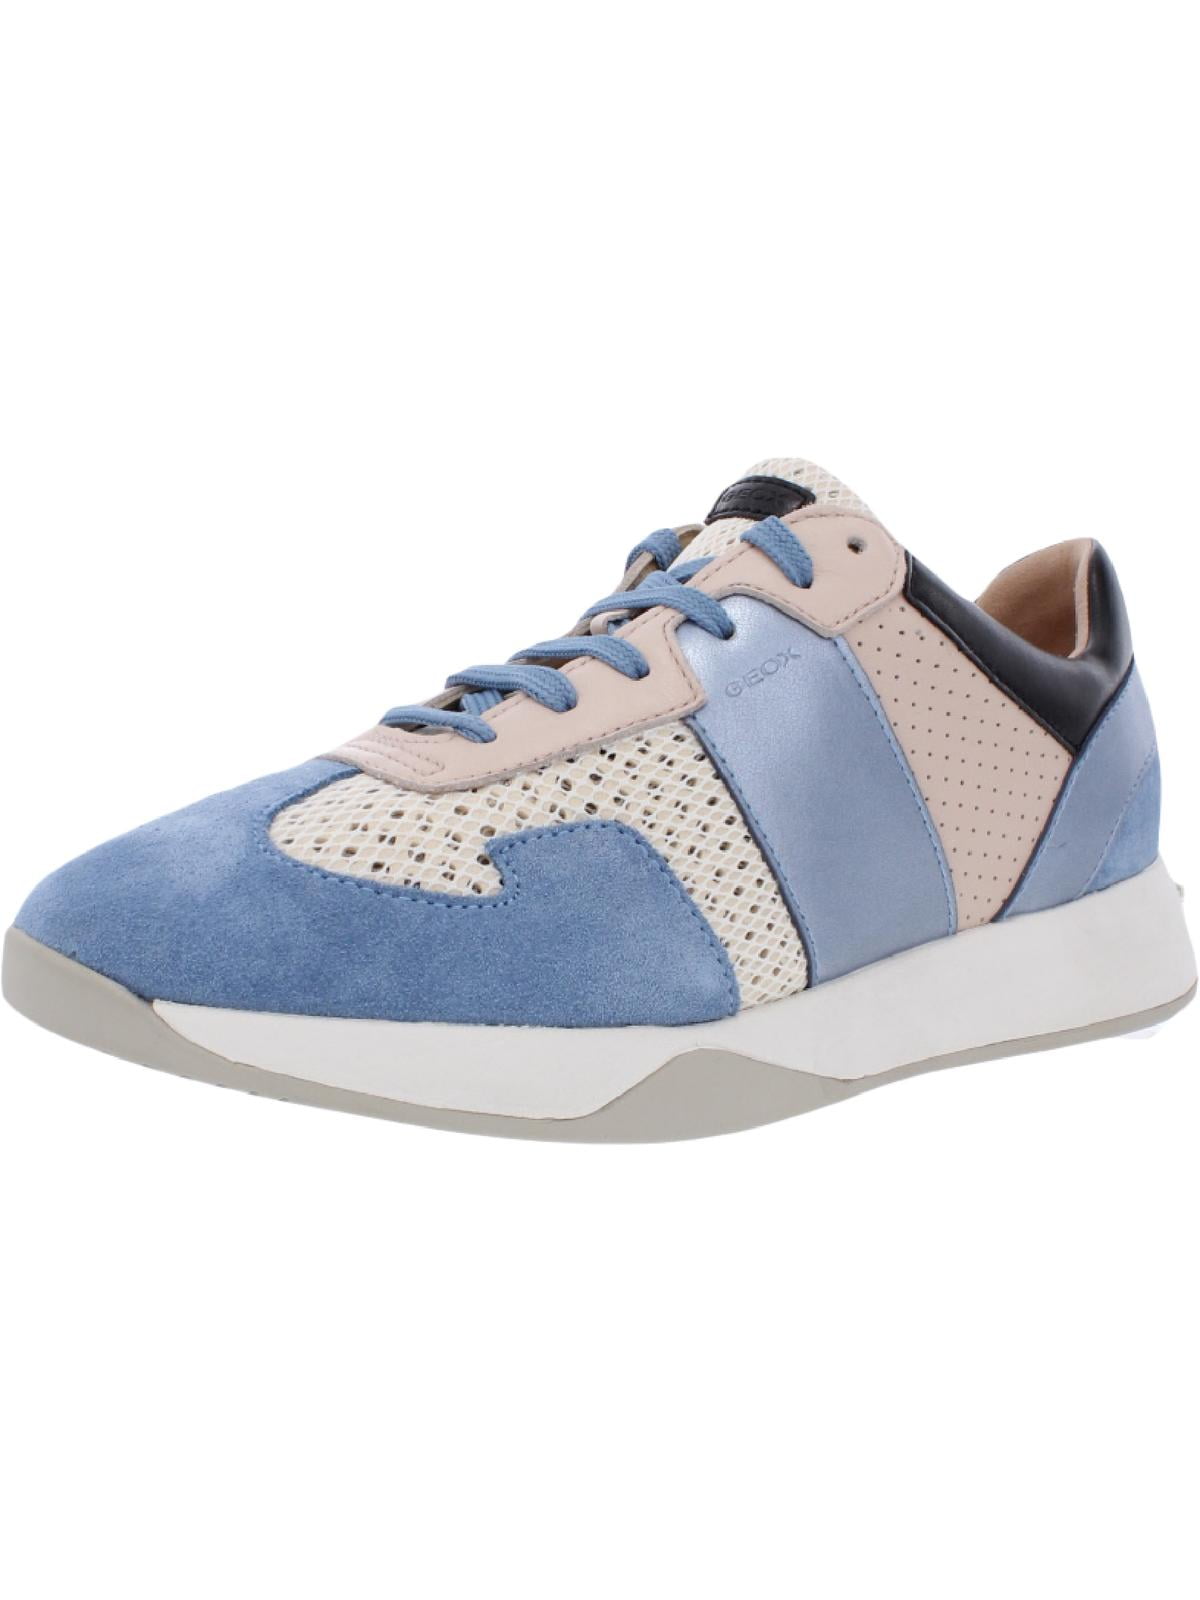 Geox Respira Womens D Suzzie Casual and Sneakers Blue 8 Medium (B,M) - Walmart.com